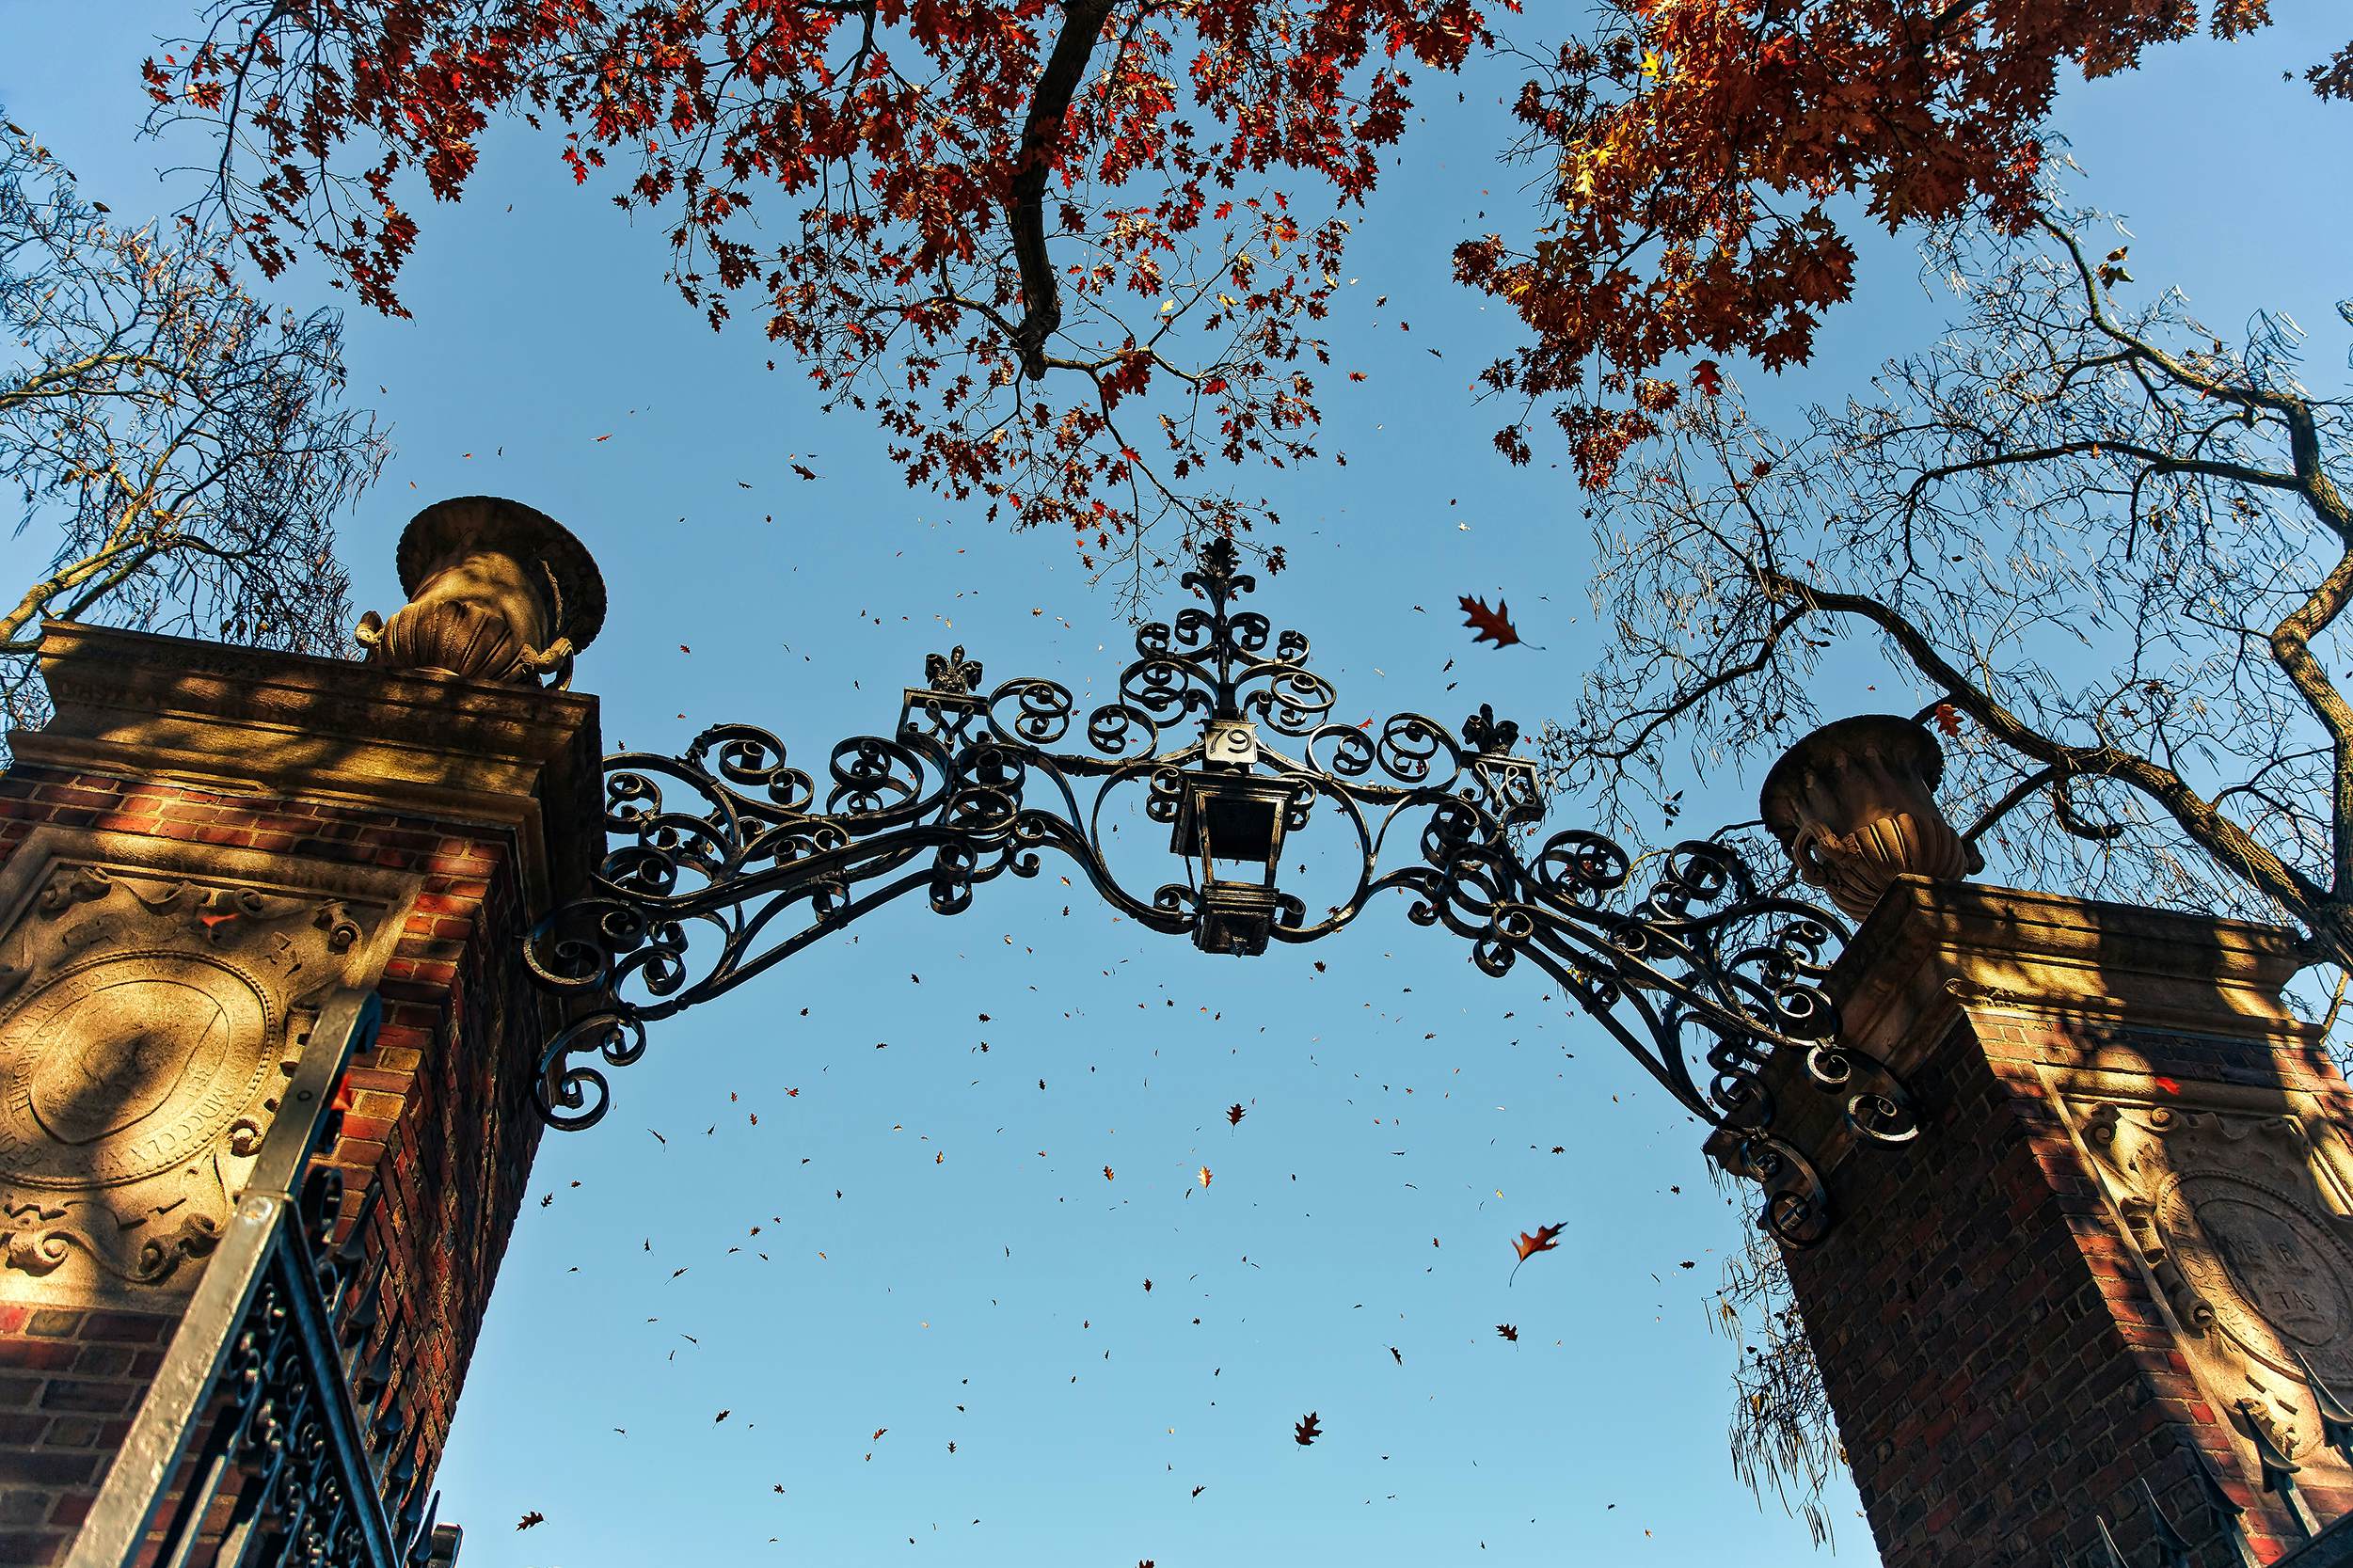 Harvard gates in autumn